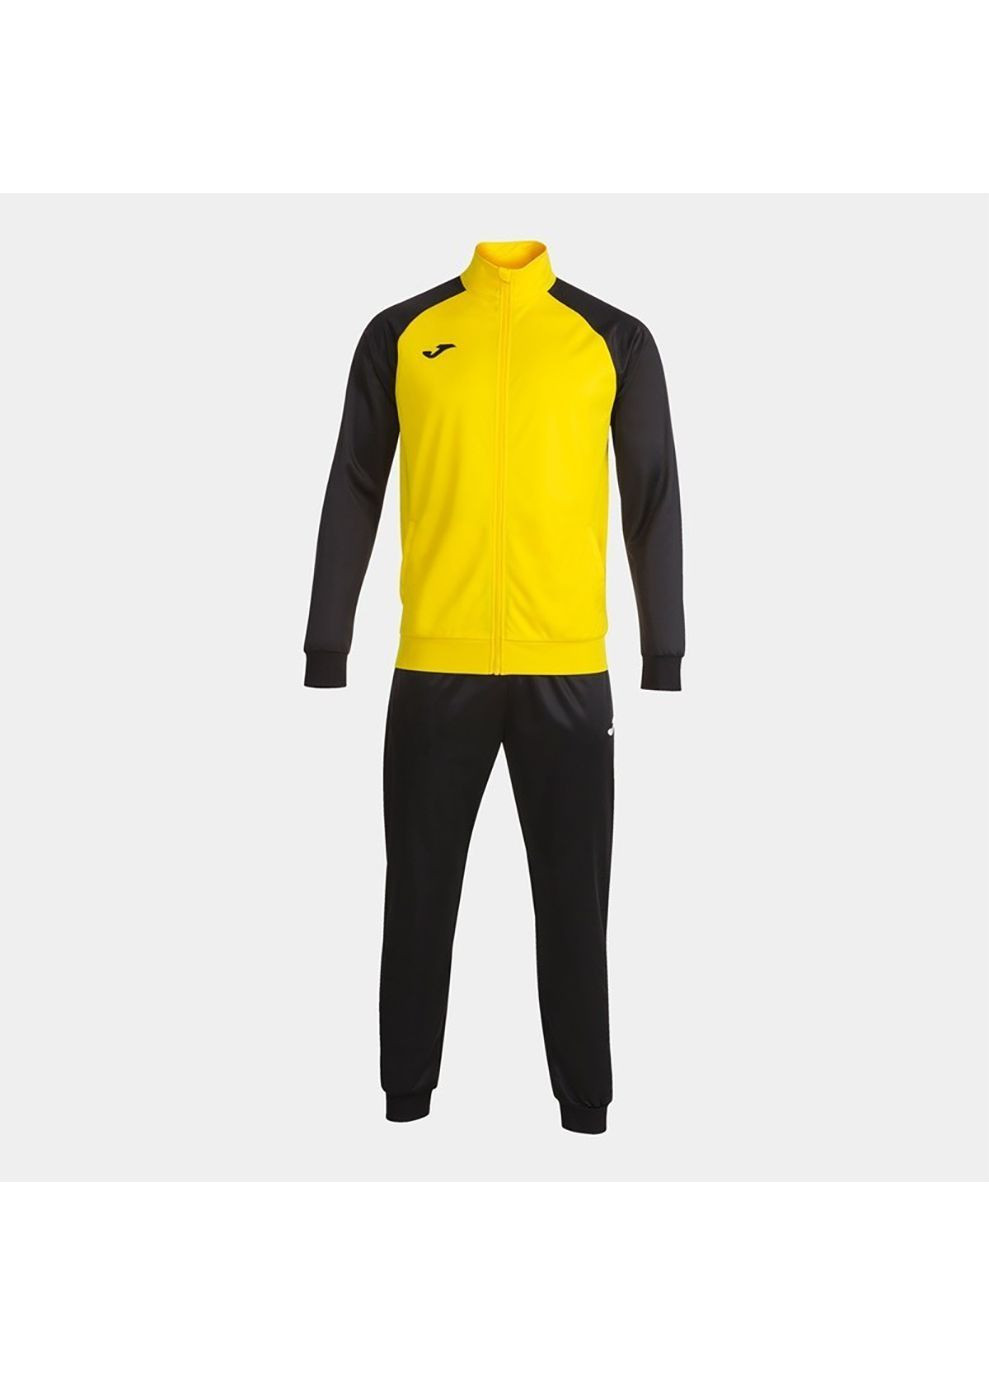 Спортивный костюм ACADEMY IV желтый,черный Joma (282318275)